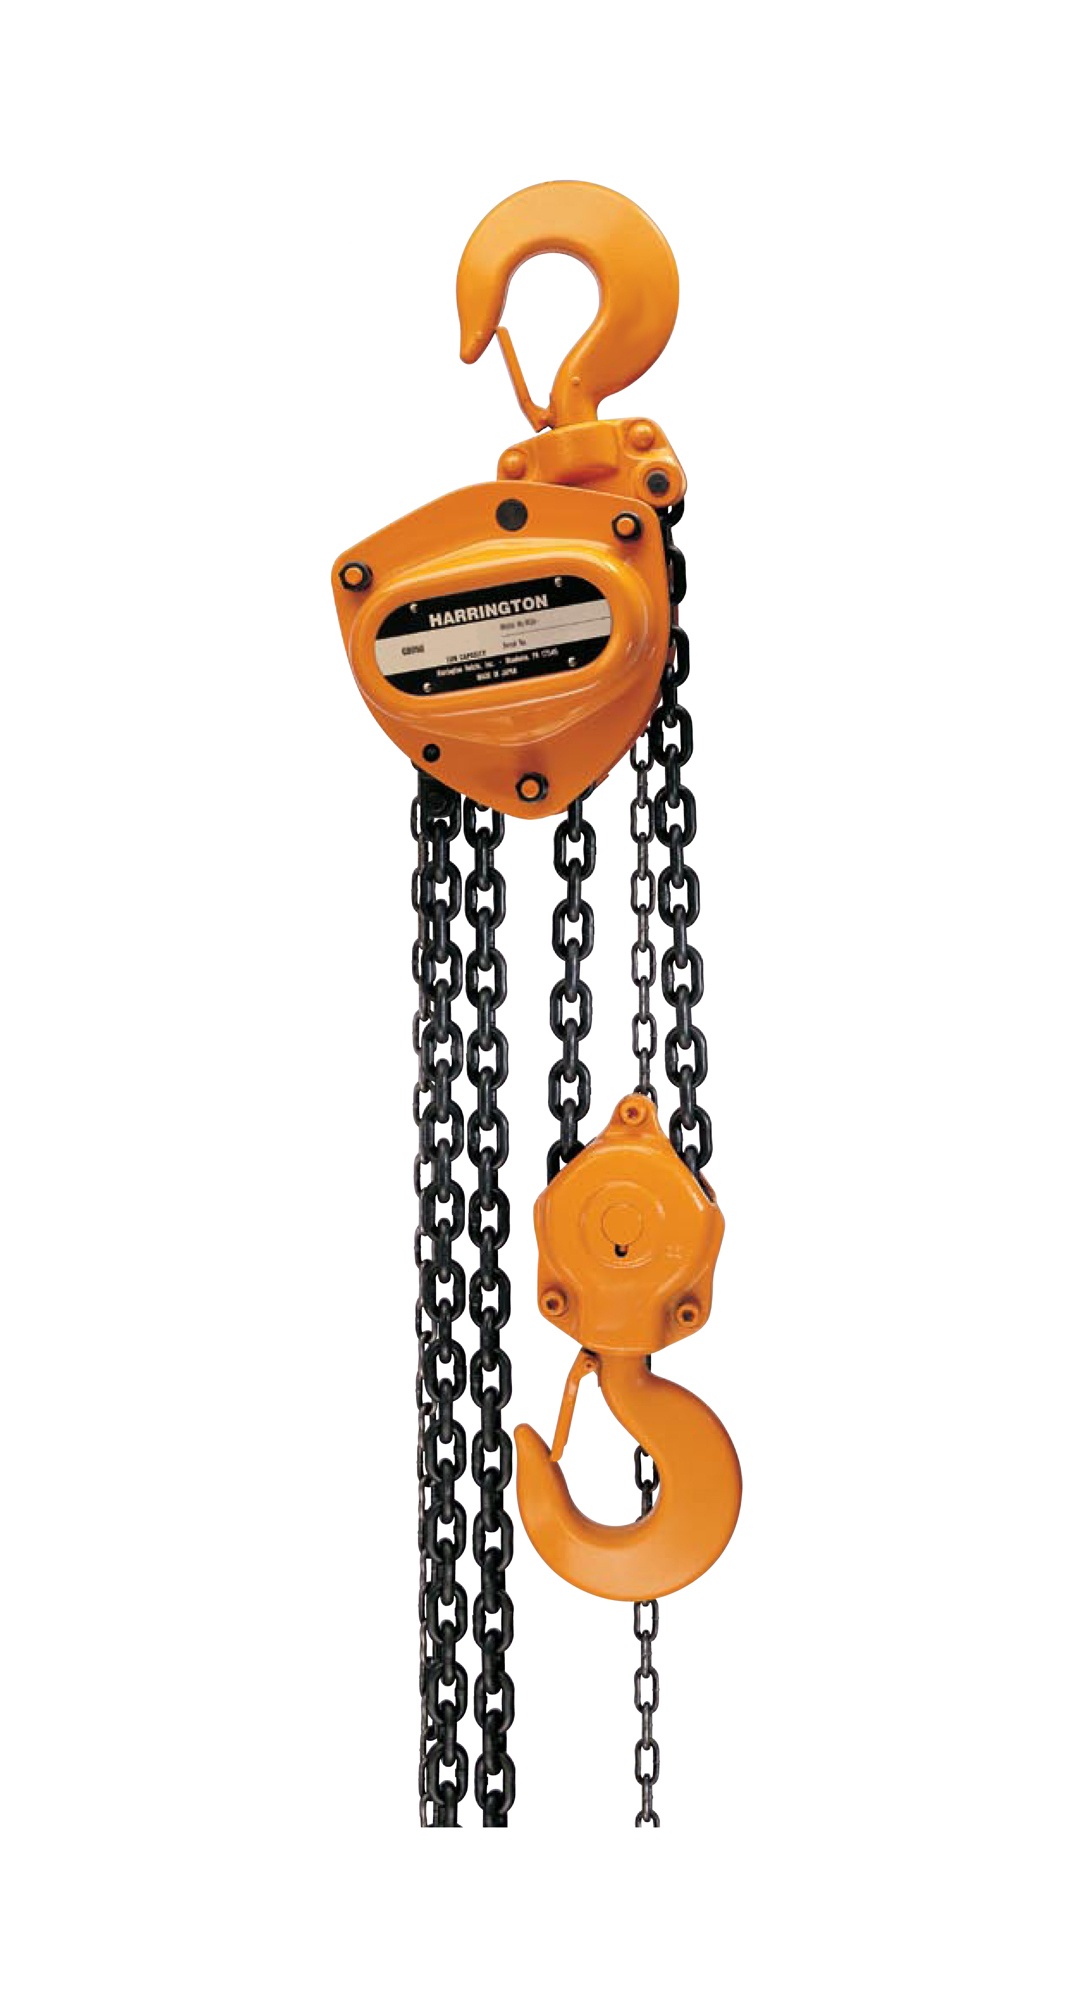 Harrington CB Hand Chain Hoist from Columbia Safety